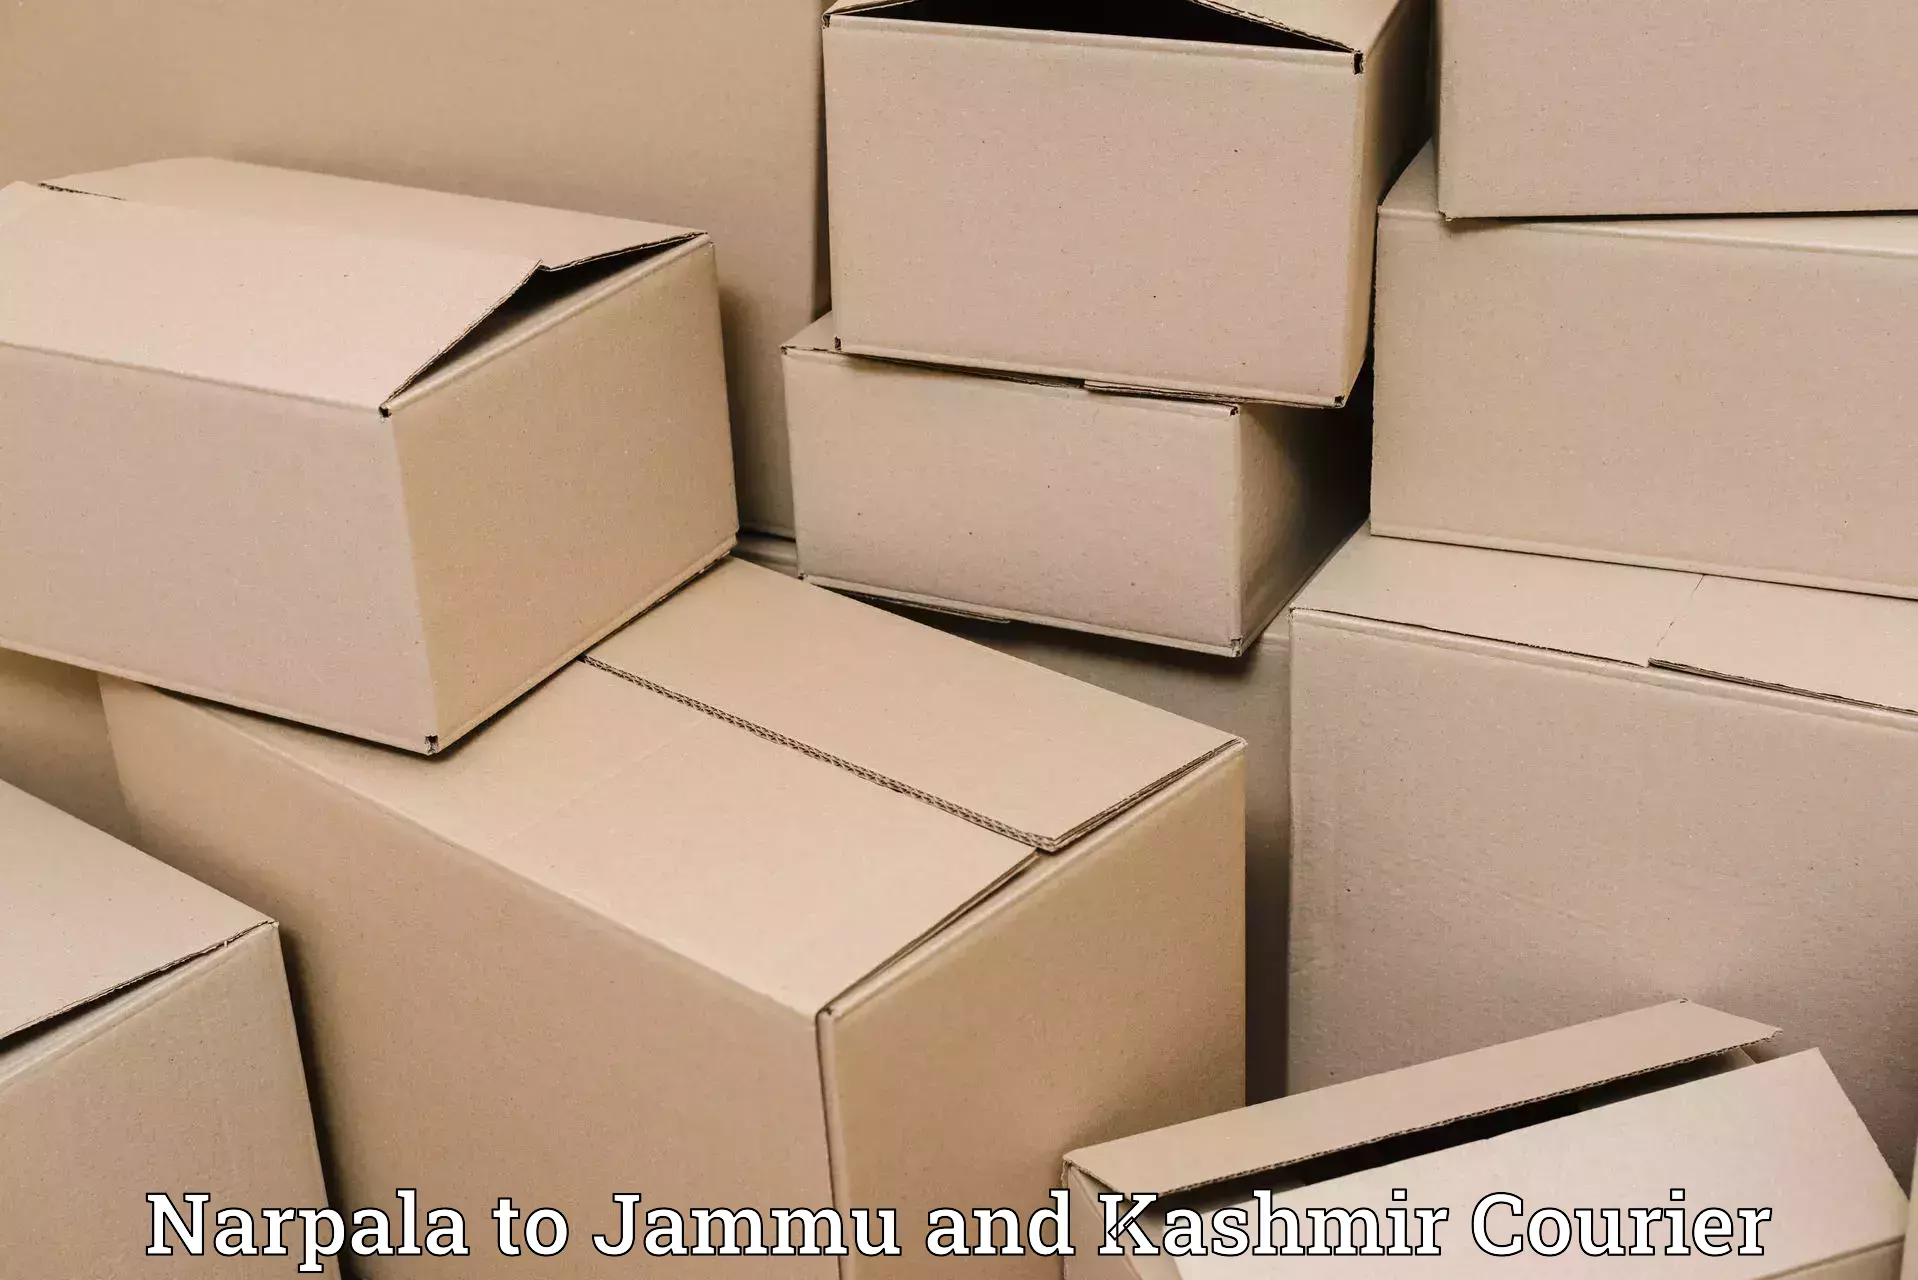 Courier service booking Narpala to Srinagar Kashmir